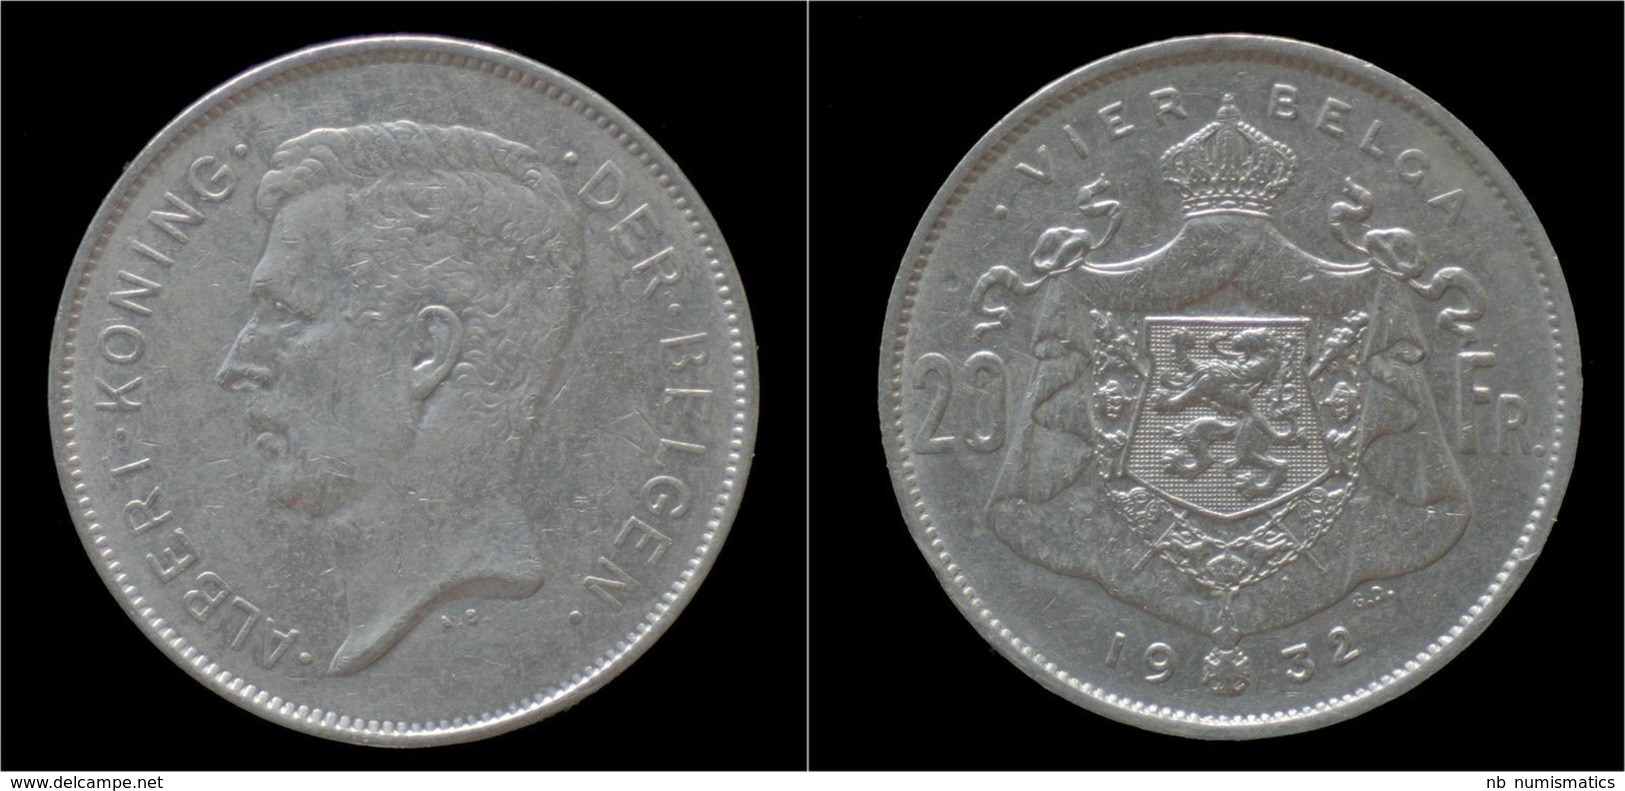 Belgium Albert I 20 Frank (4belga) 1932-VL-pos B - 20 Francs & 4 Belgas